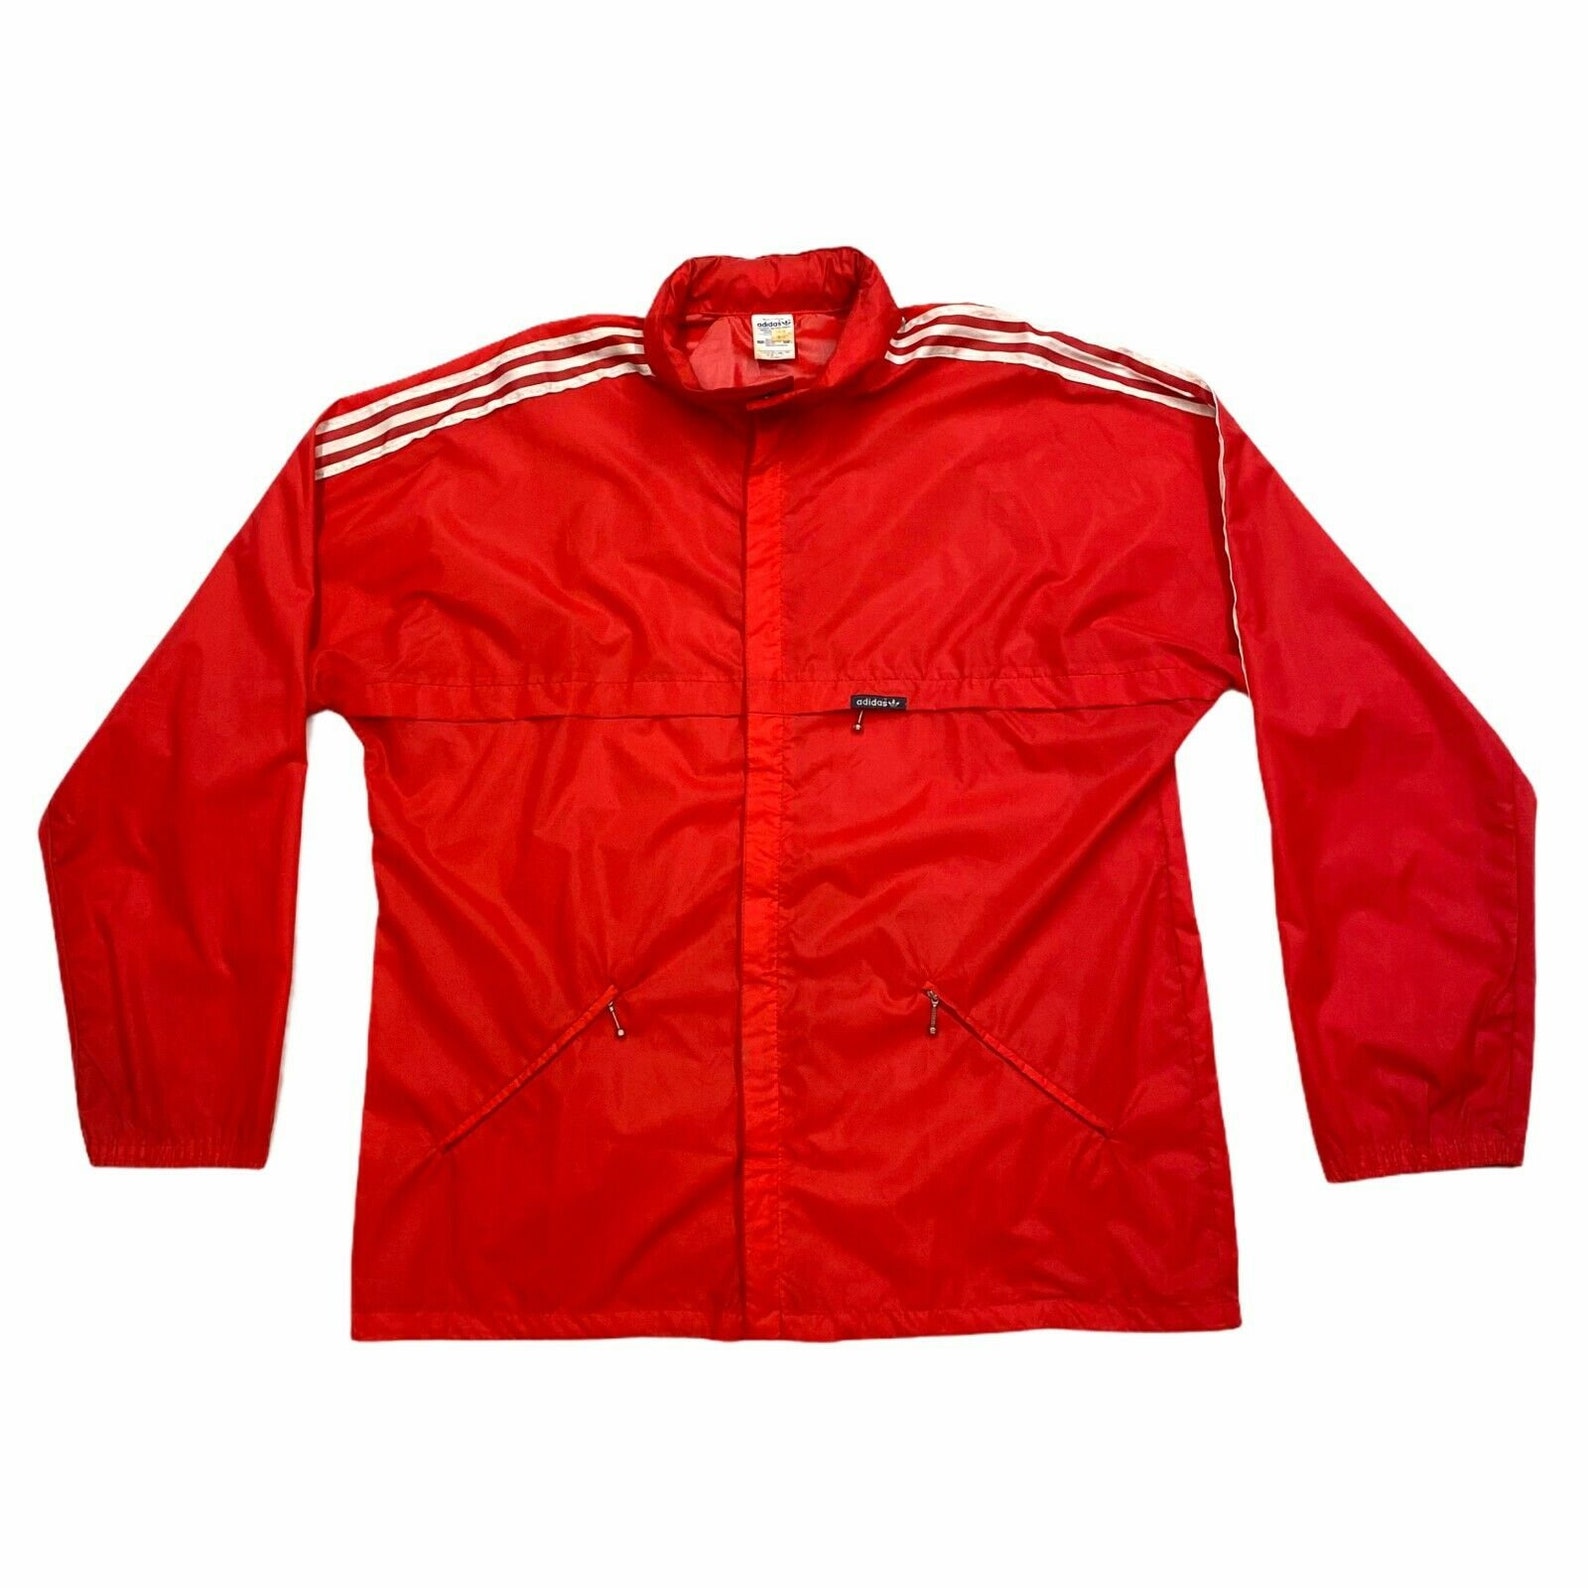 Adidas Originals Lightweight Rain Coat Jacket Vintage 80s | Etsy